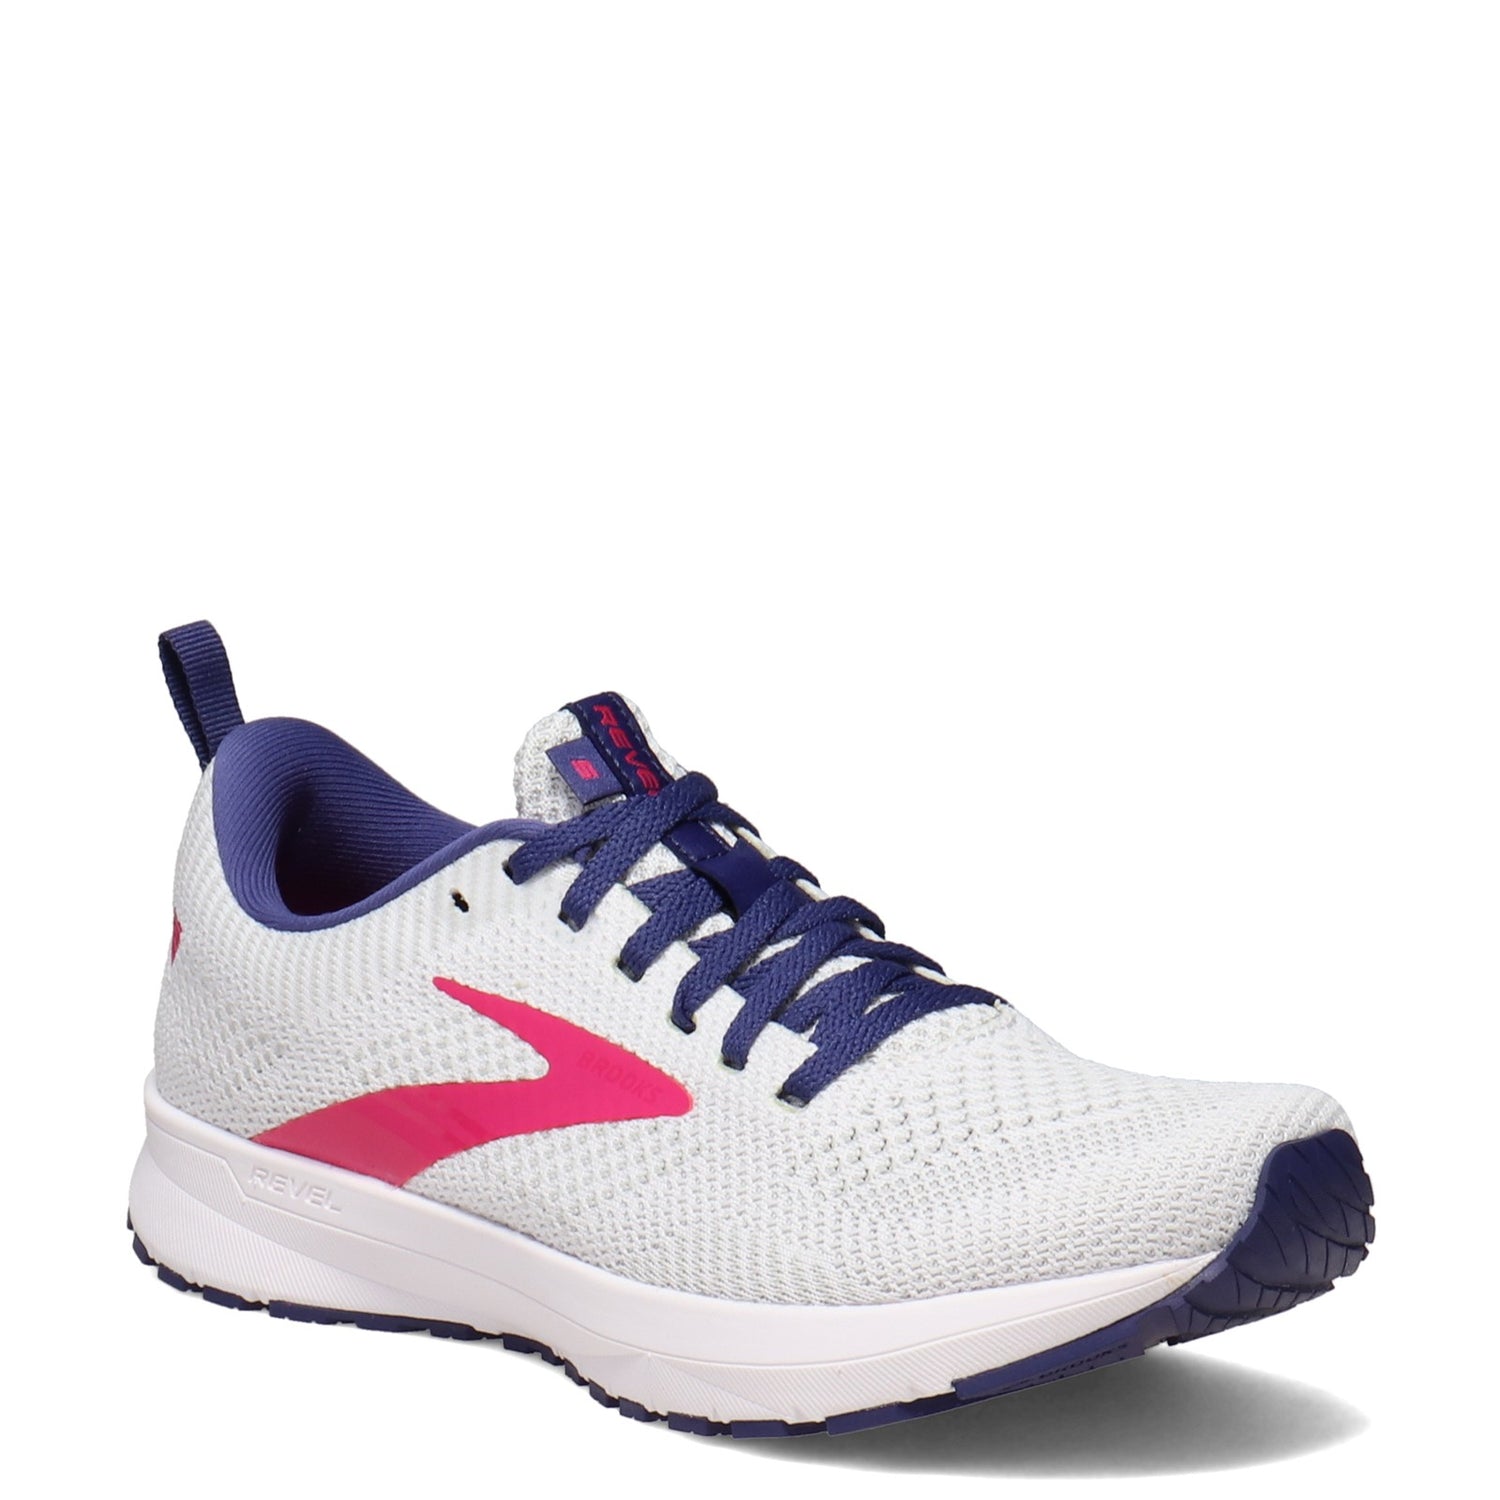 Peltz Shoes  Women's Brooks Revel 5 Running Shoe White/Navy/Pink 120361 1B 193